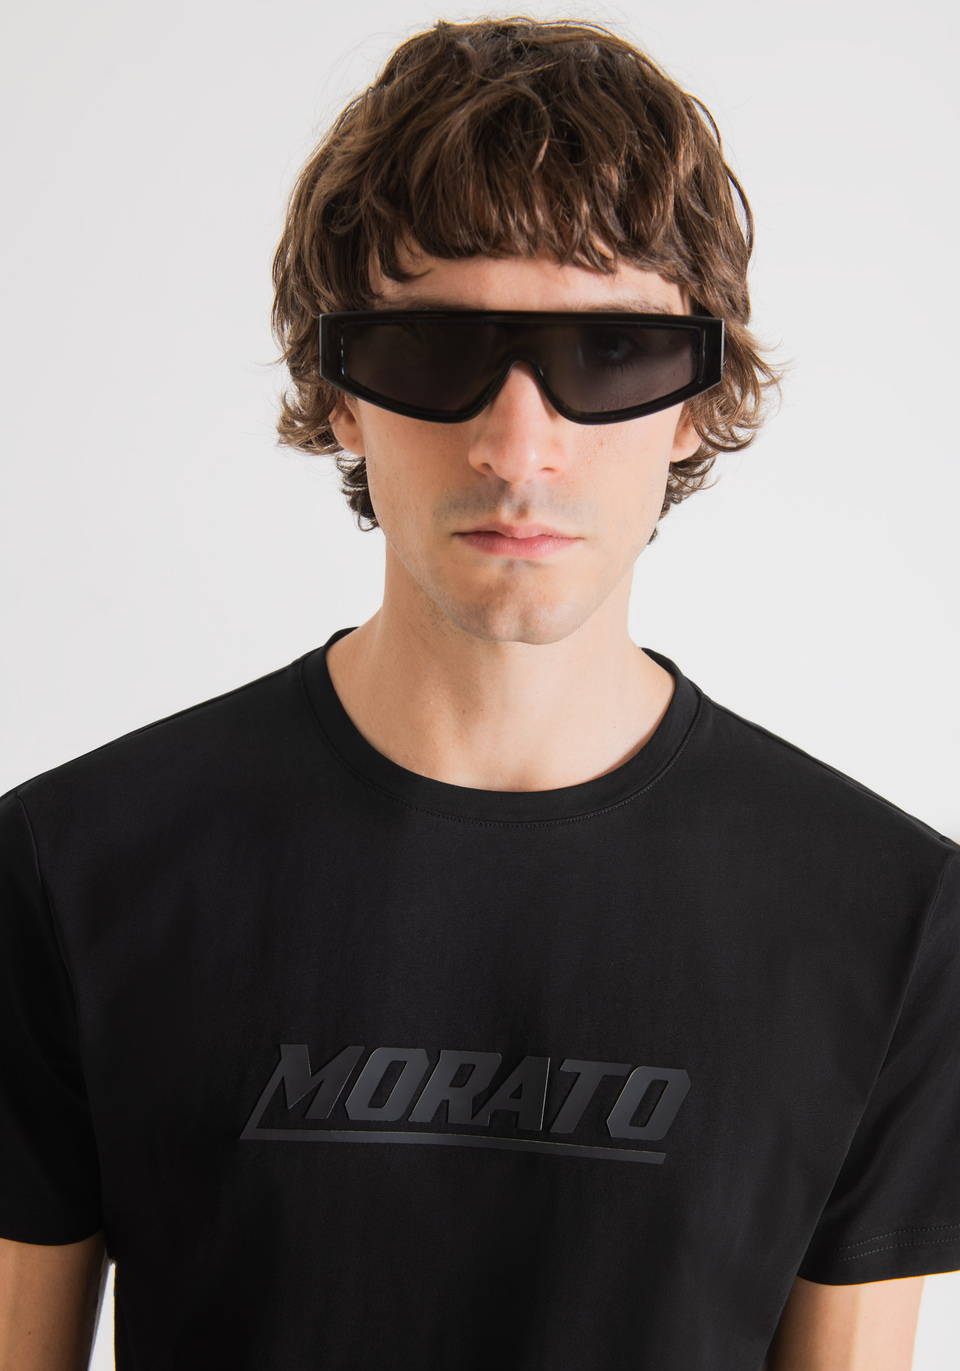 SLIM-FIT T-SHIRT IN PURE COTTON WITH RUBBERISED MORATO PRINT - Antony Morato Online Shop